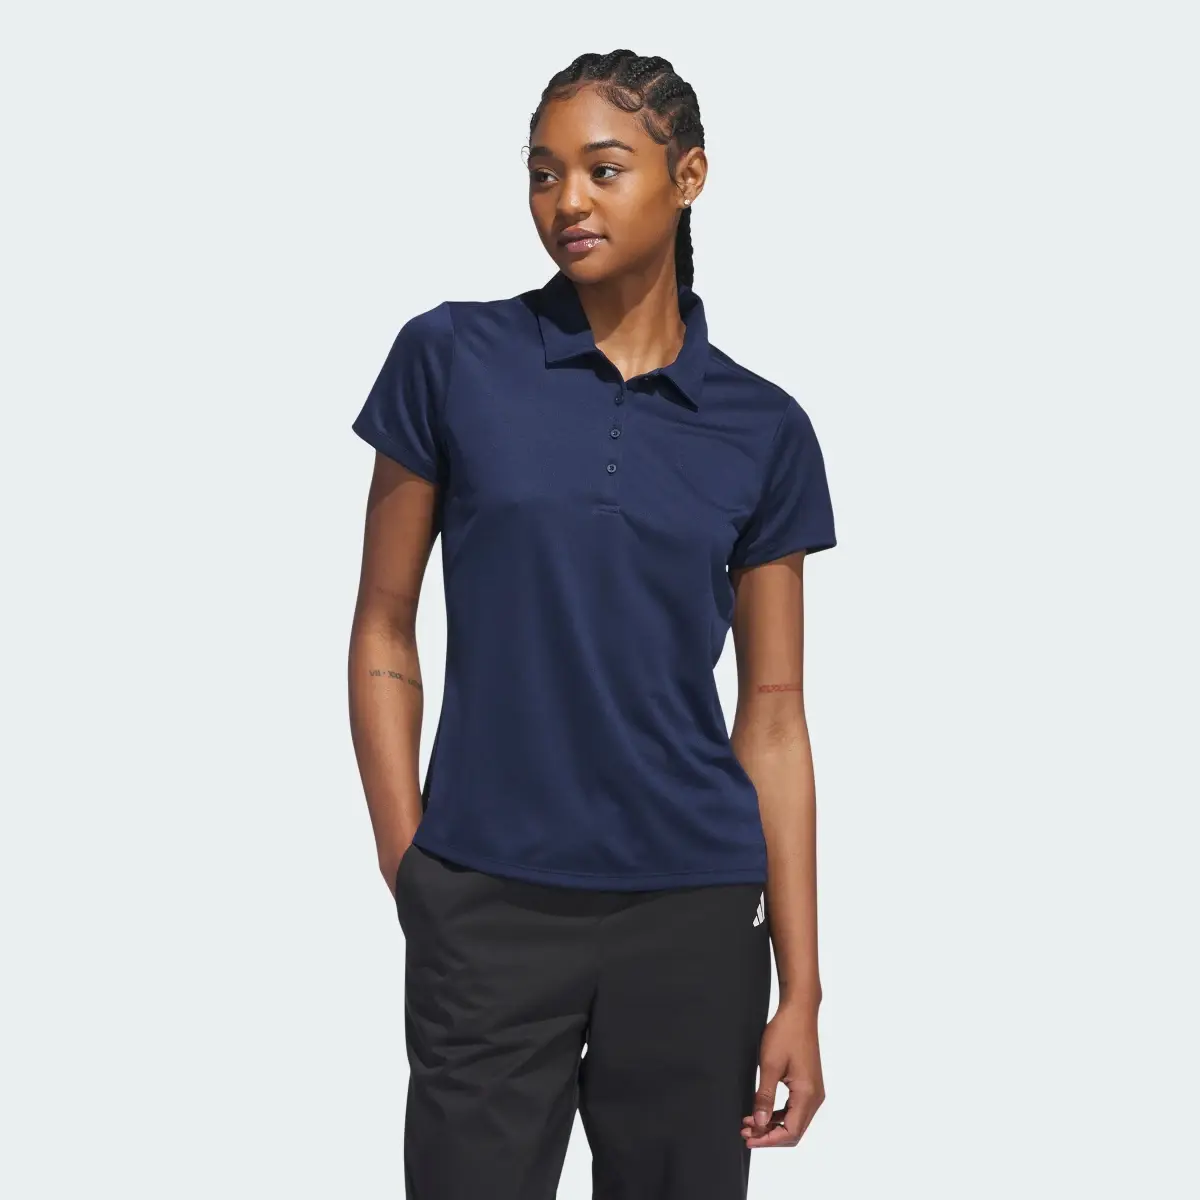 Adidas Women's Solid Performance Short Sleeve Polo Tişört. 2